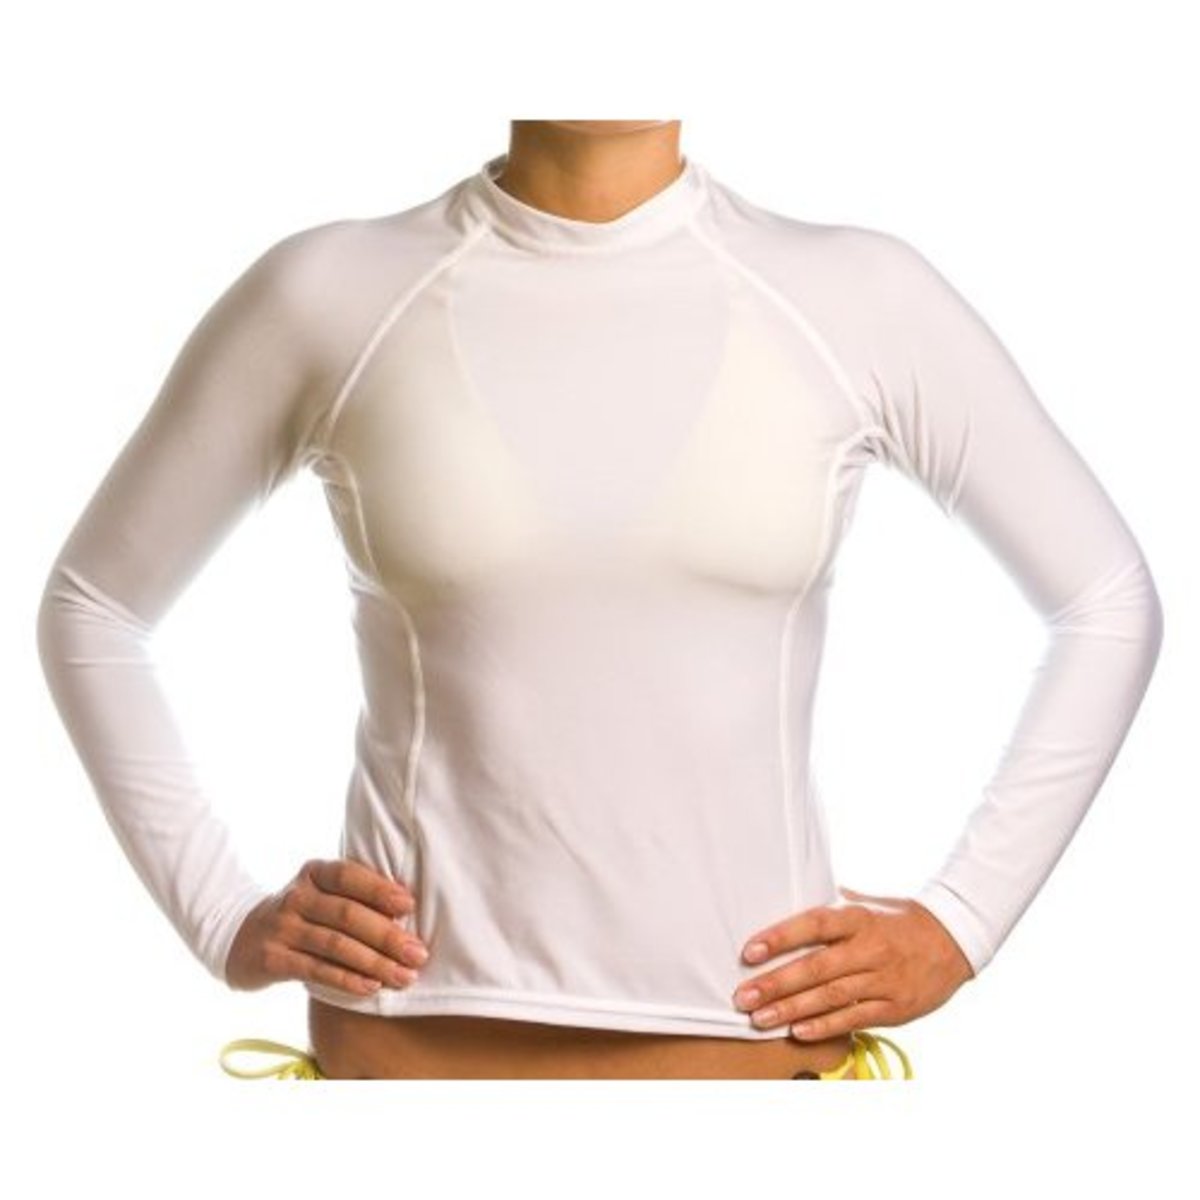 white rash guard swim shirt on female